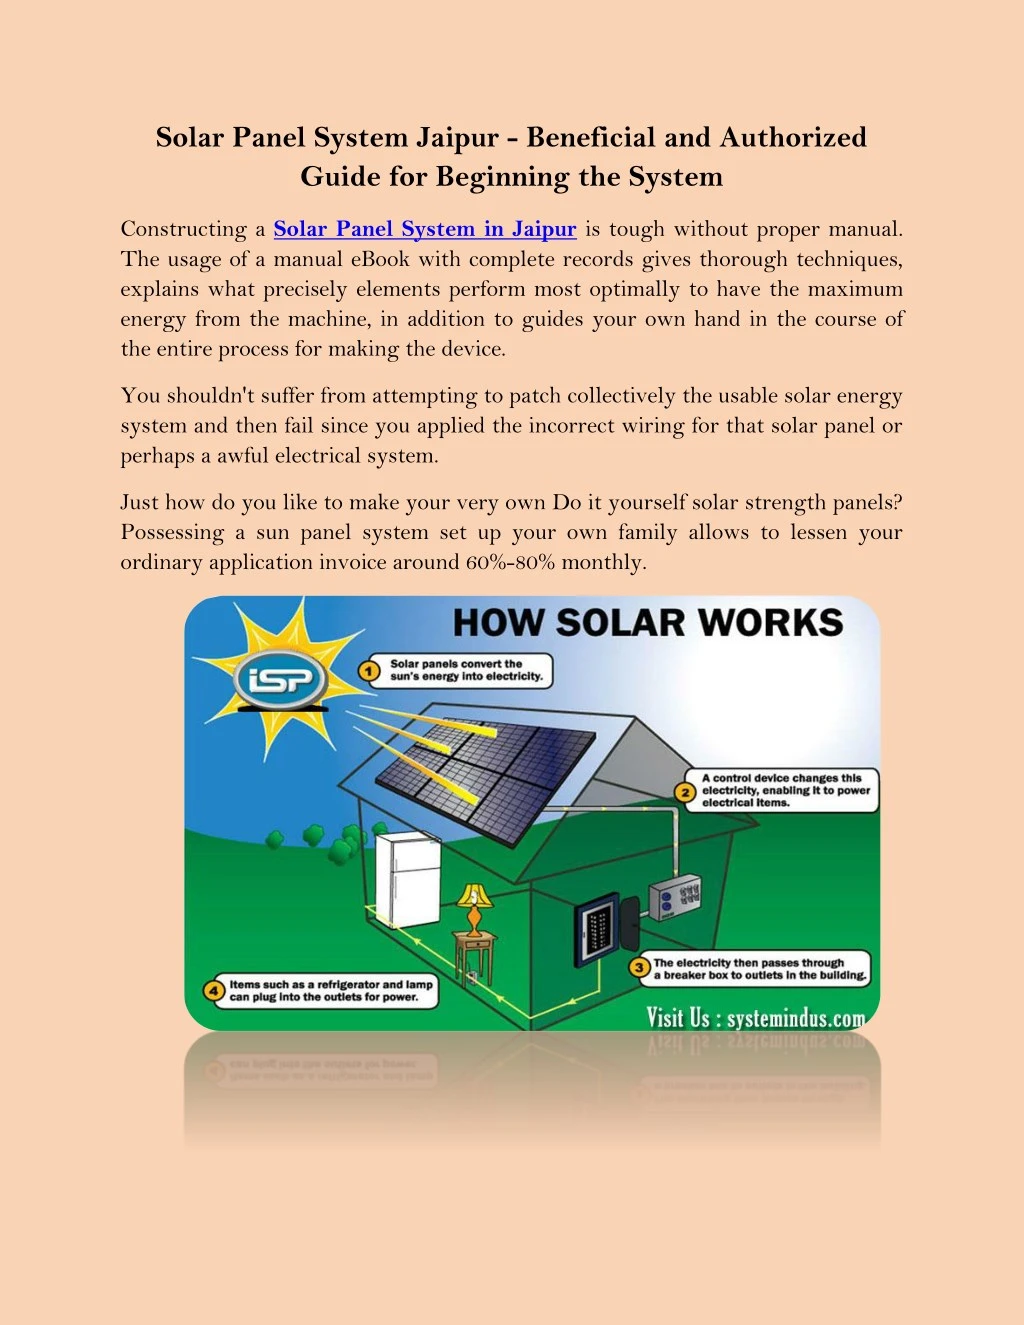 solar panel system jaipur beneficial